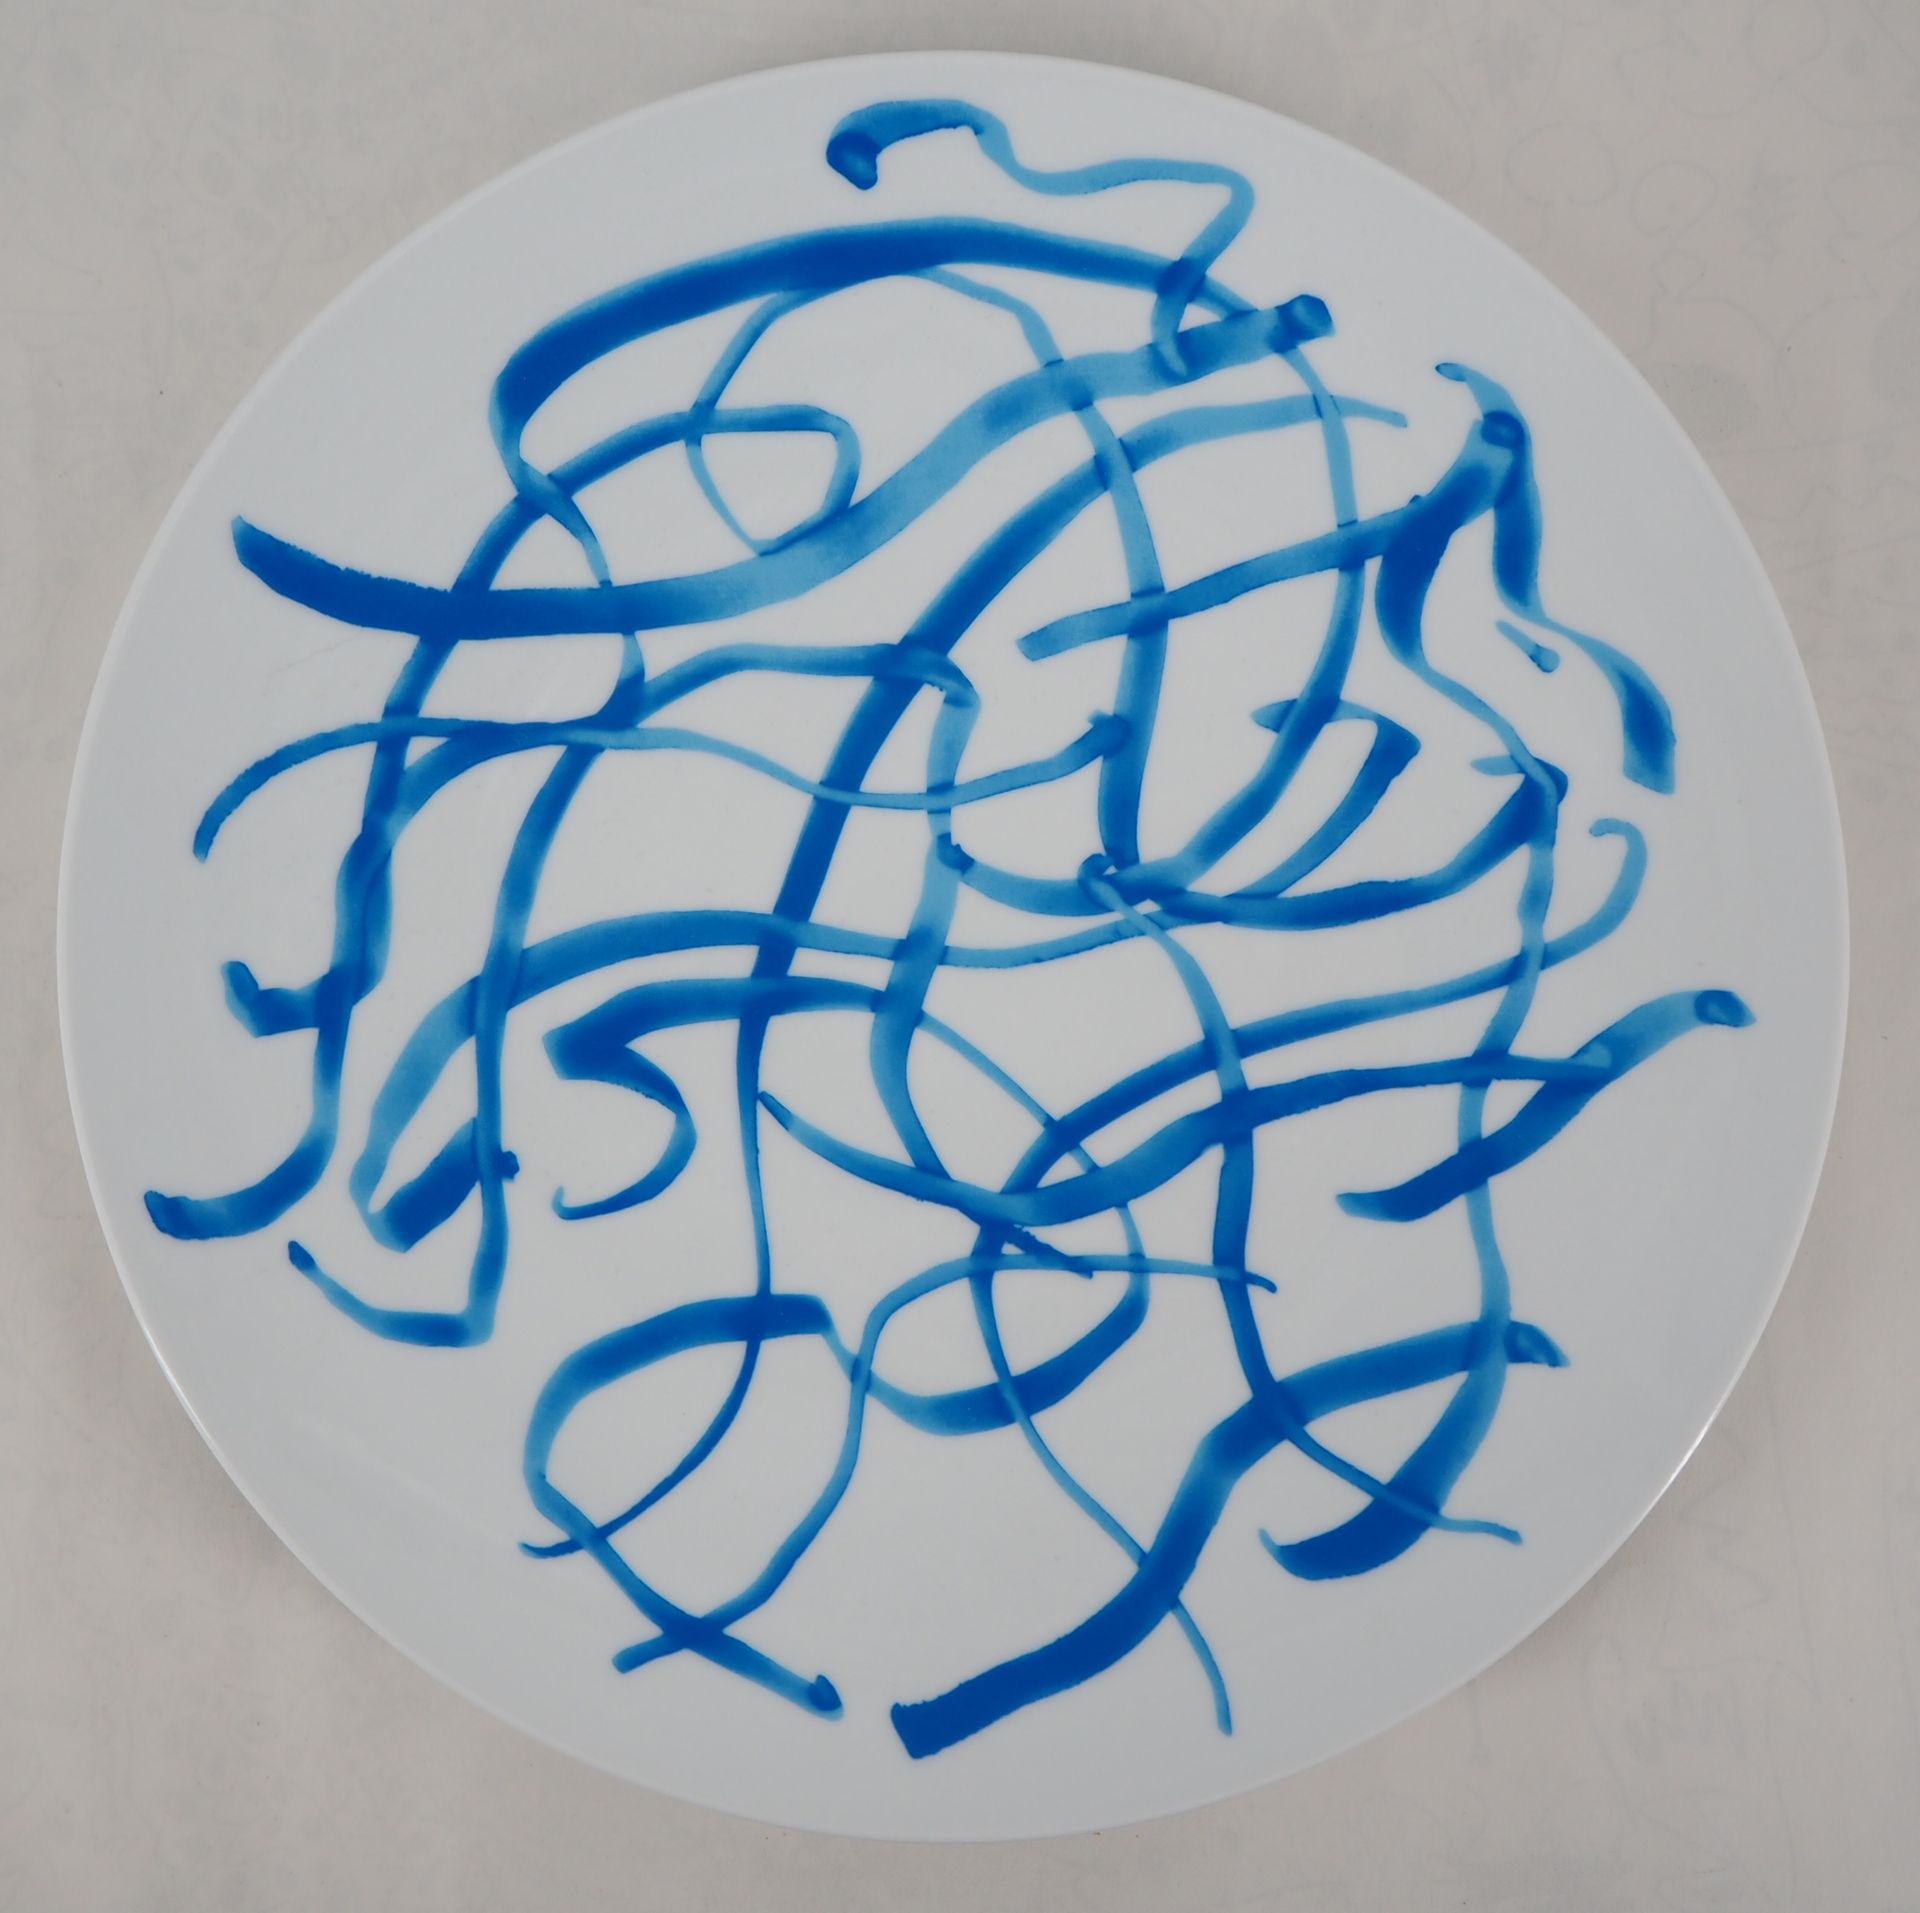 ZAO WOU-KI 赵无极

蓝线

利摩日瓷器上的丝网印刷(Bernardaud)

背面有签名

直径32厘米

小版本，为巴黎市立现代艺术博物馆之友而作&hellip;